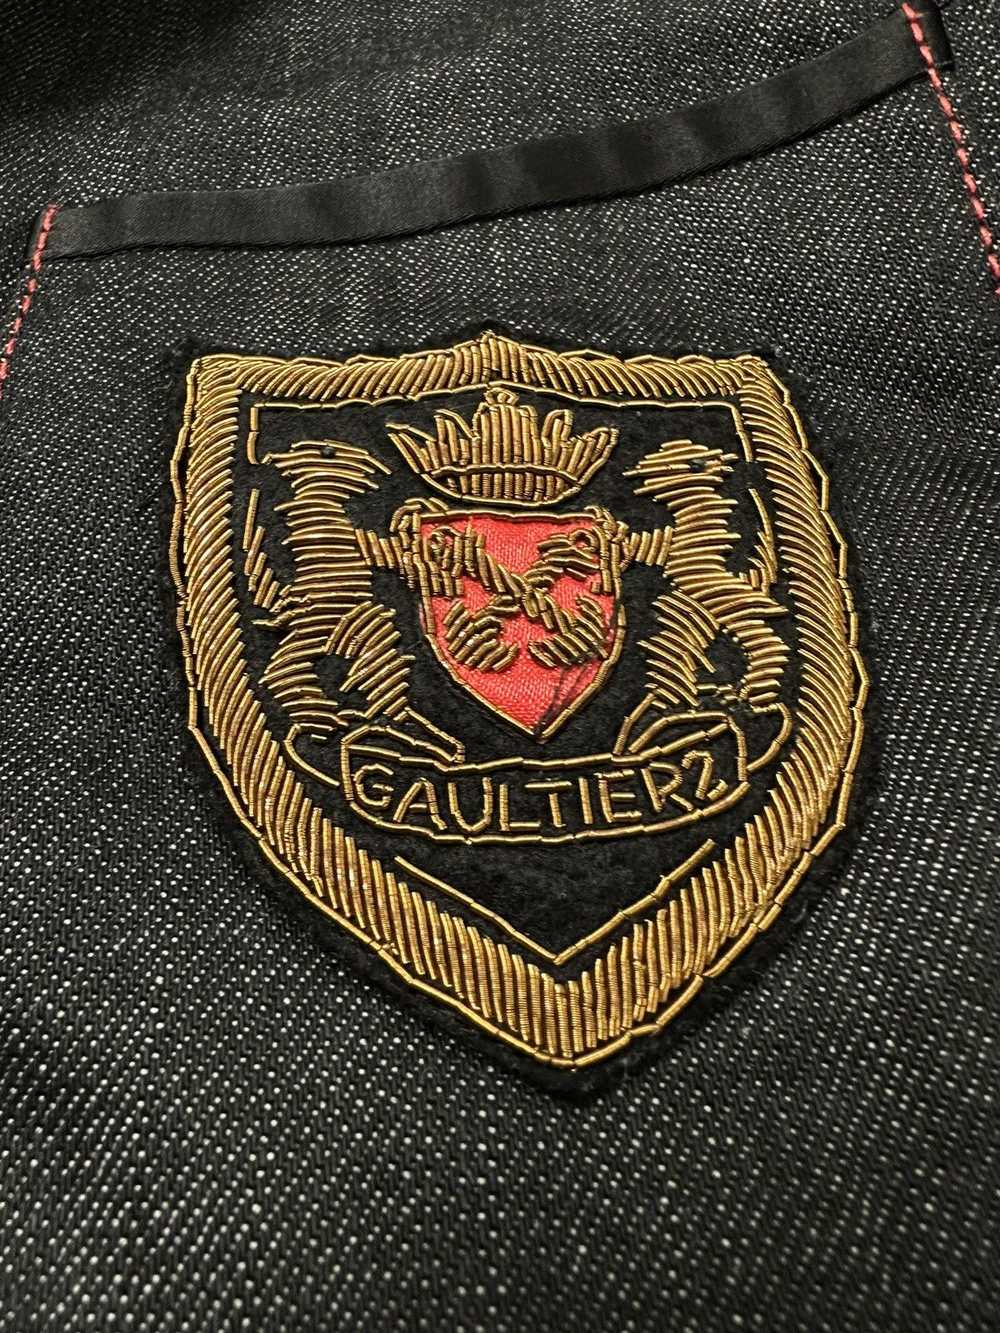 Designer × Gaultier 2 × Jean Paul Gaultier Jean P… - image 4